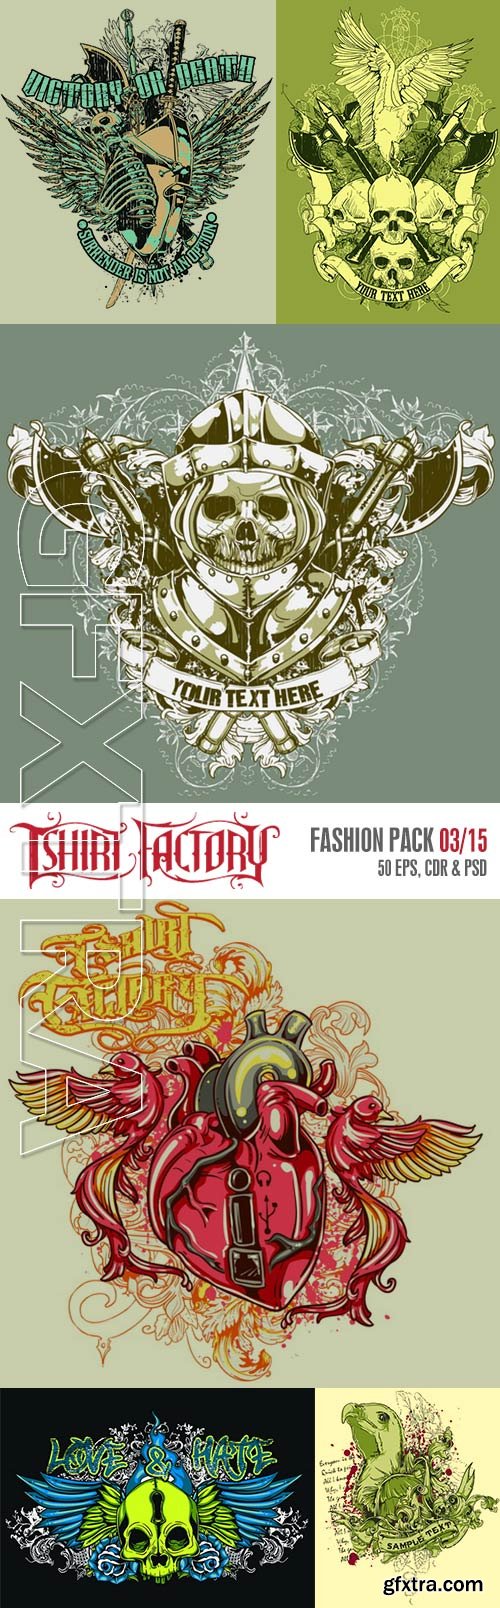 T-Shirt Factory - Fashion Pack 03/15